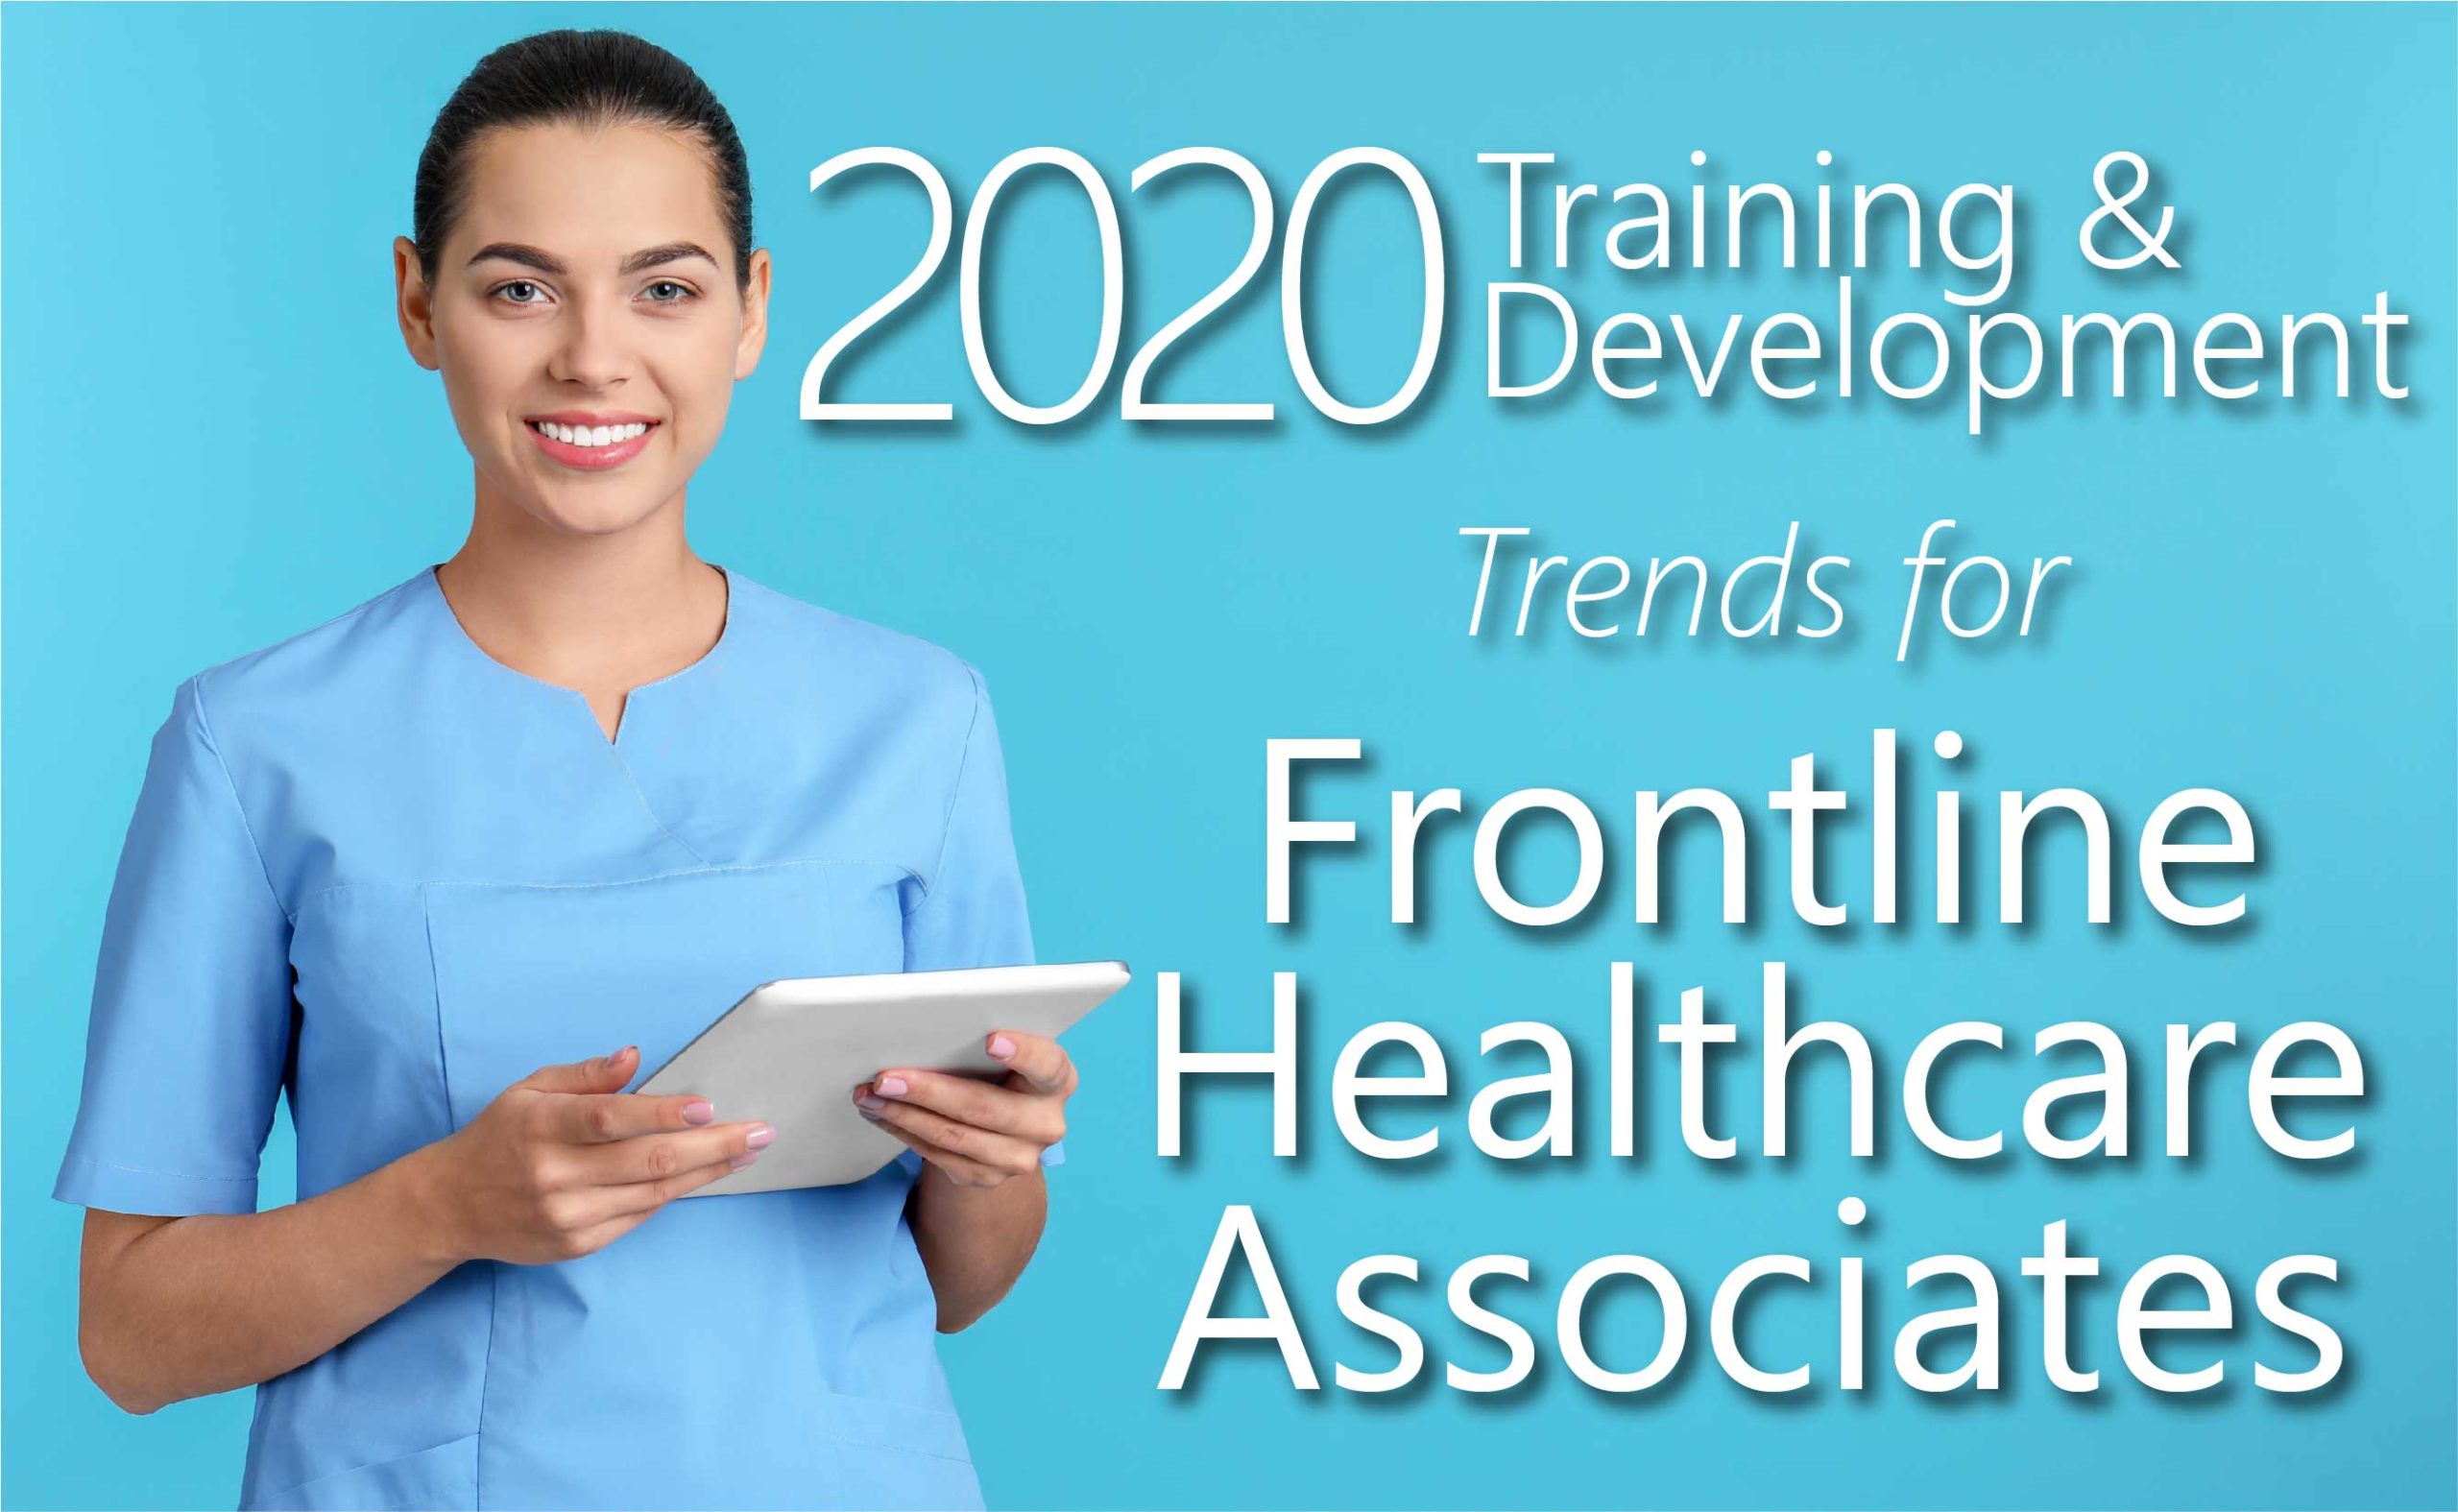 2020 Training & Development Trends for Frontline Healthcare Associates